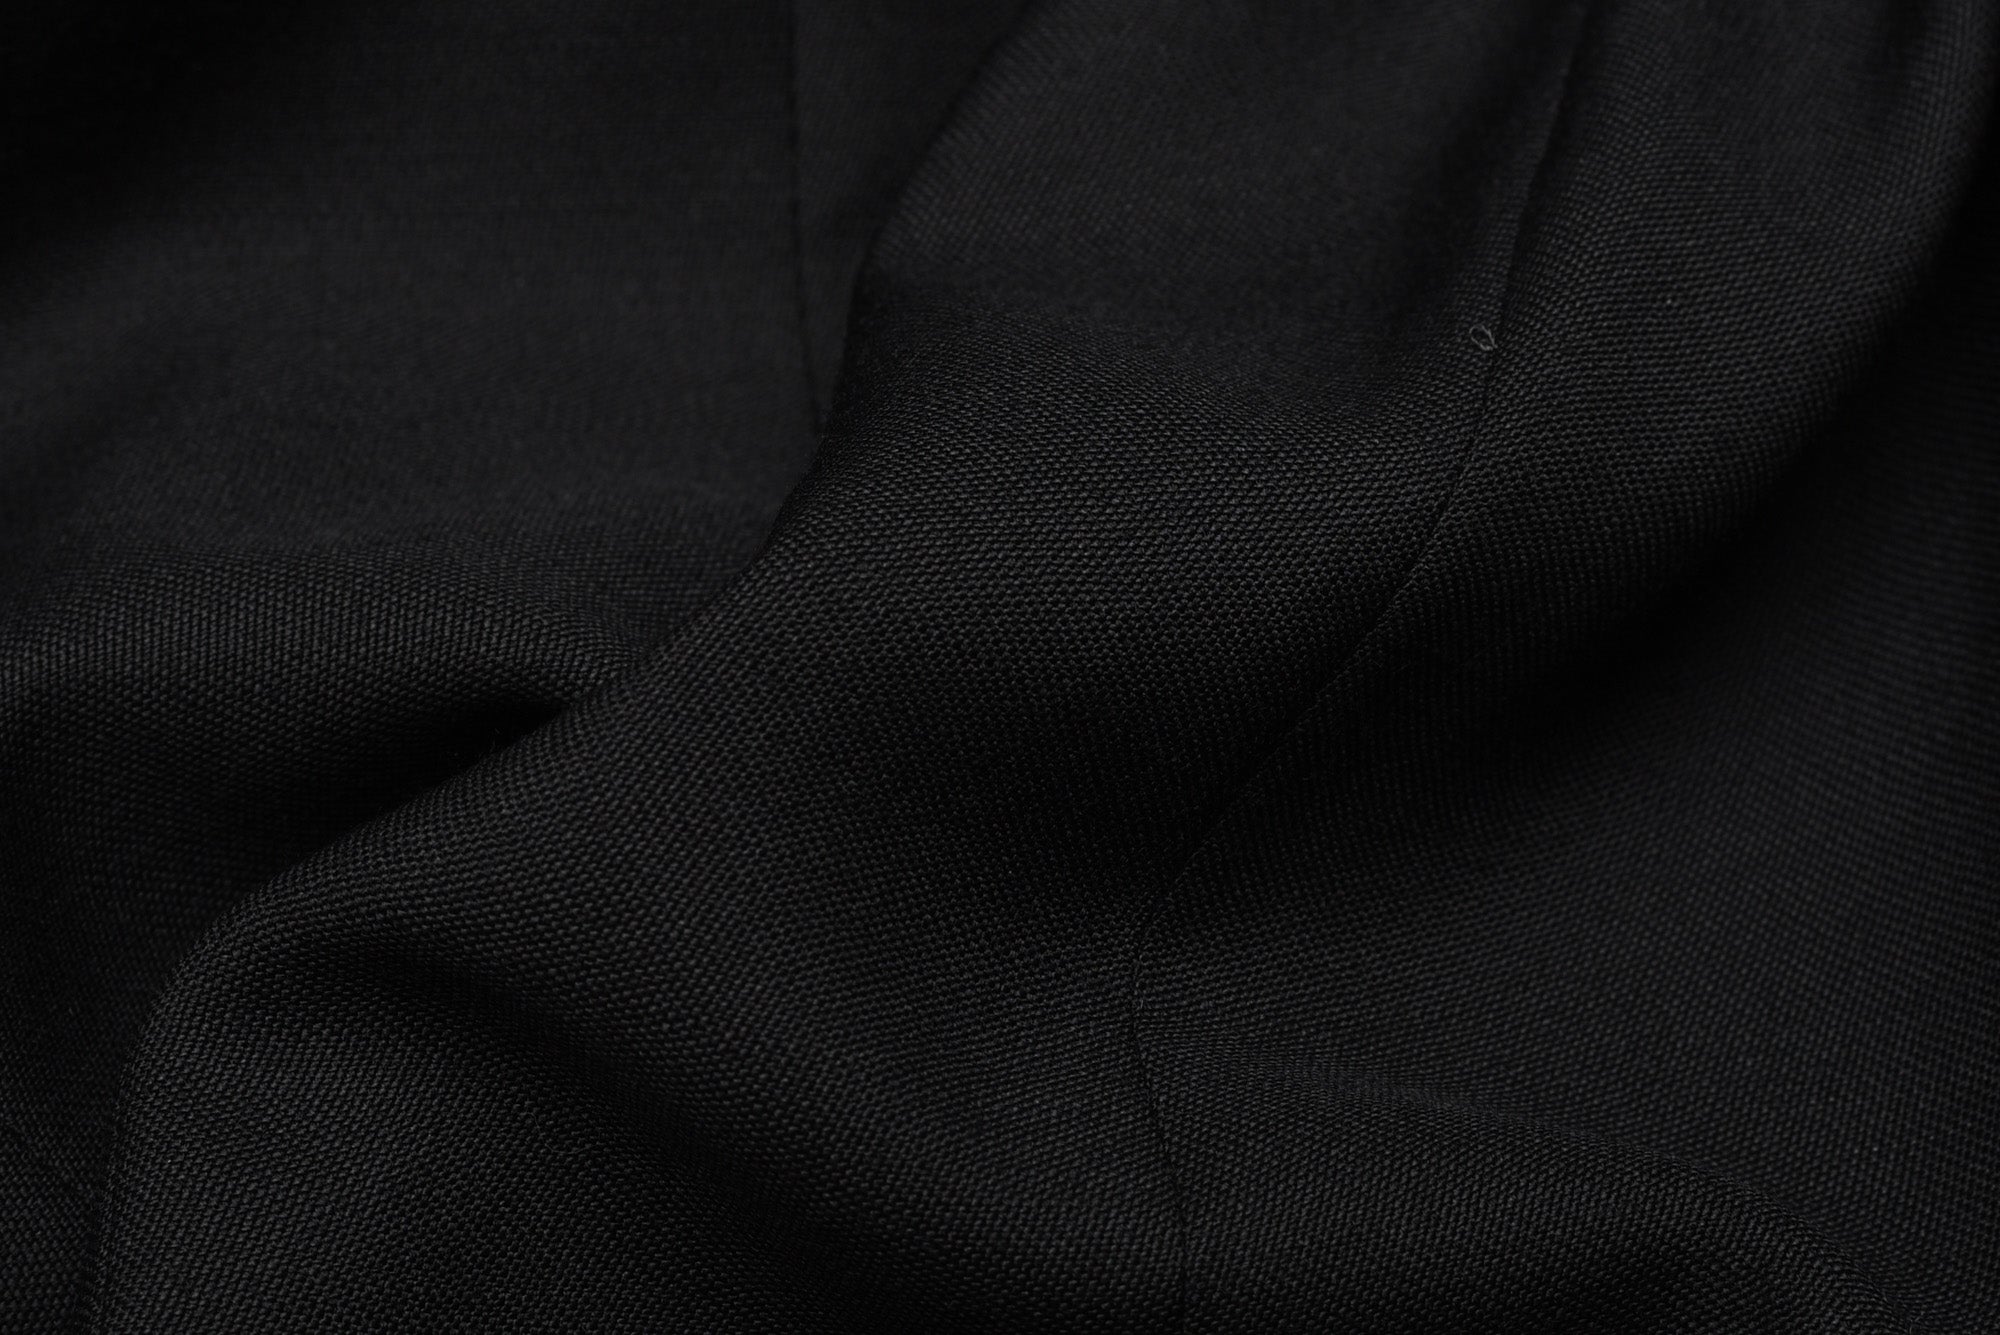 BIJAN Handmade Black Wool Mohair DB Tail Coat Frock Suit EU 58 NEW US ...